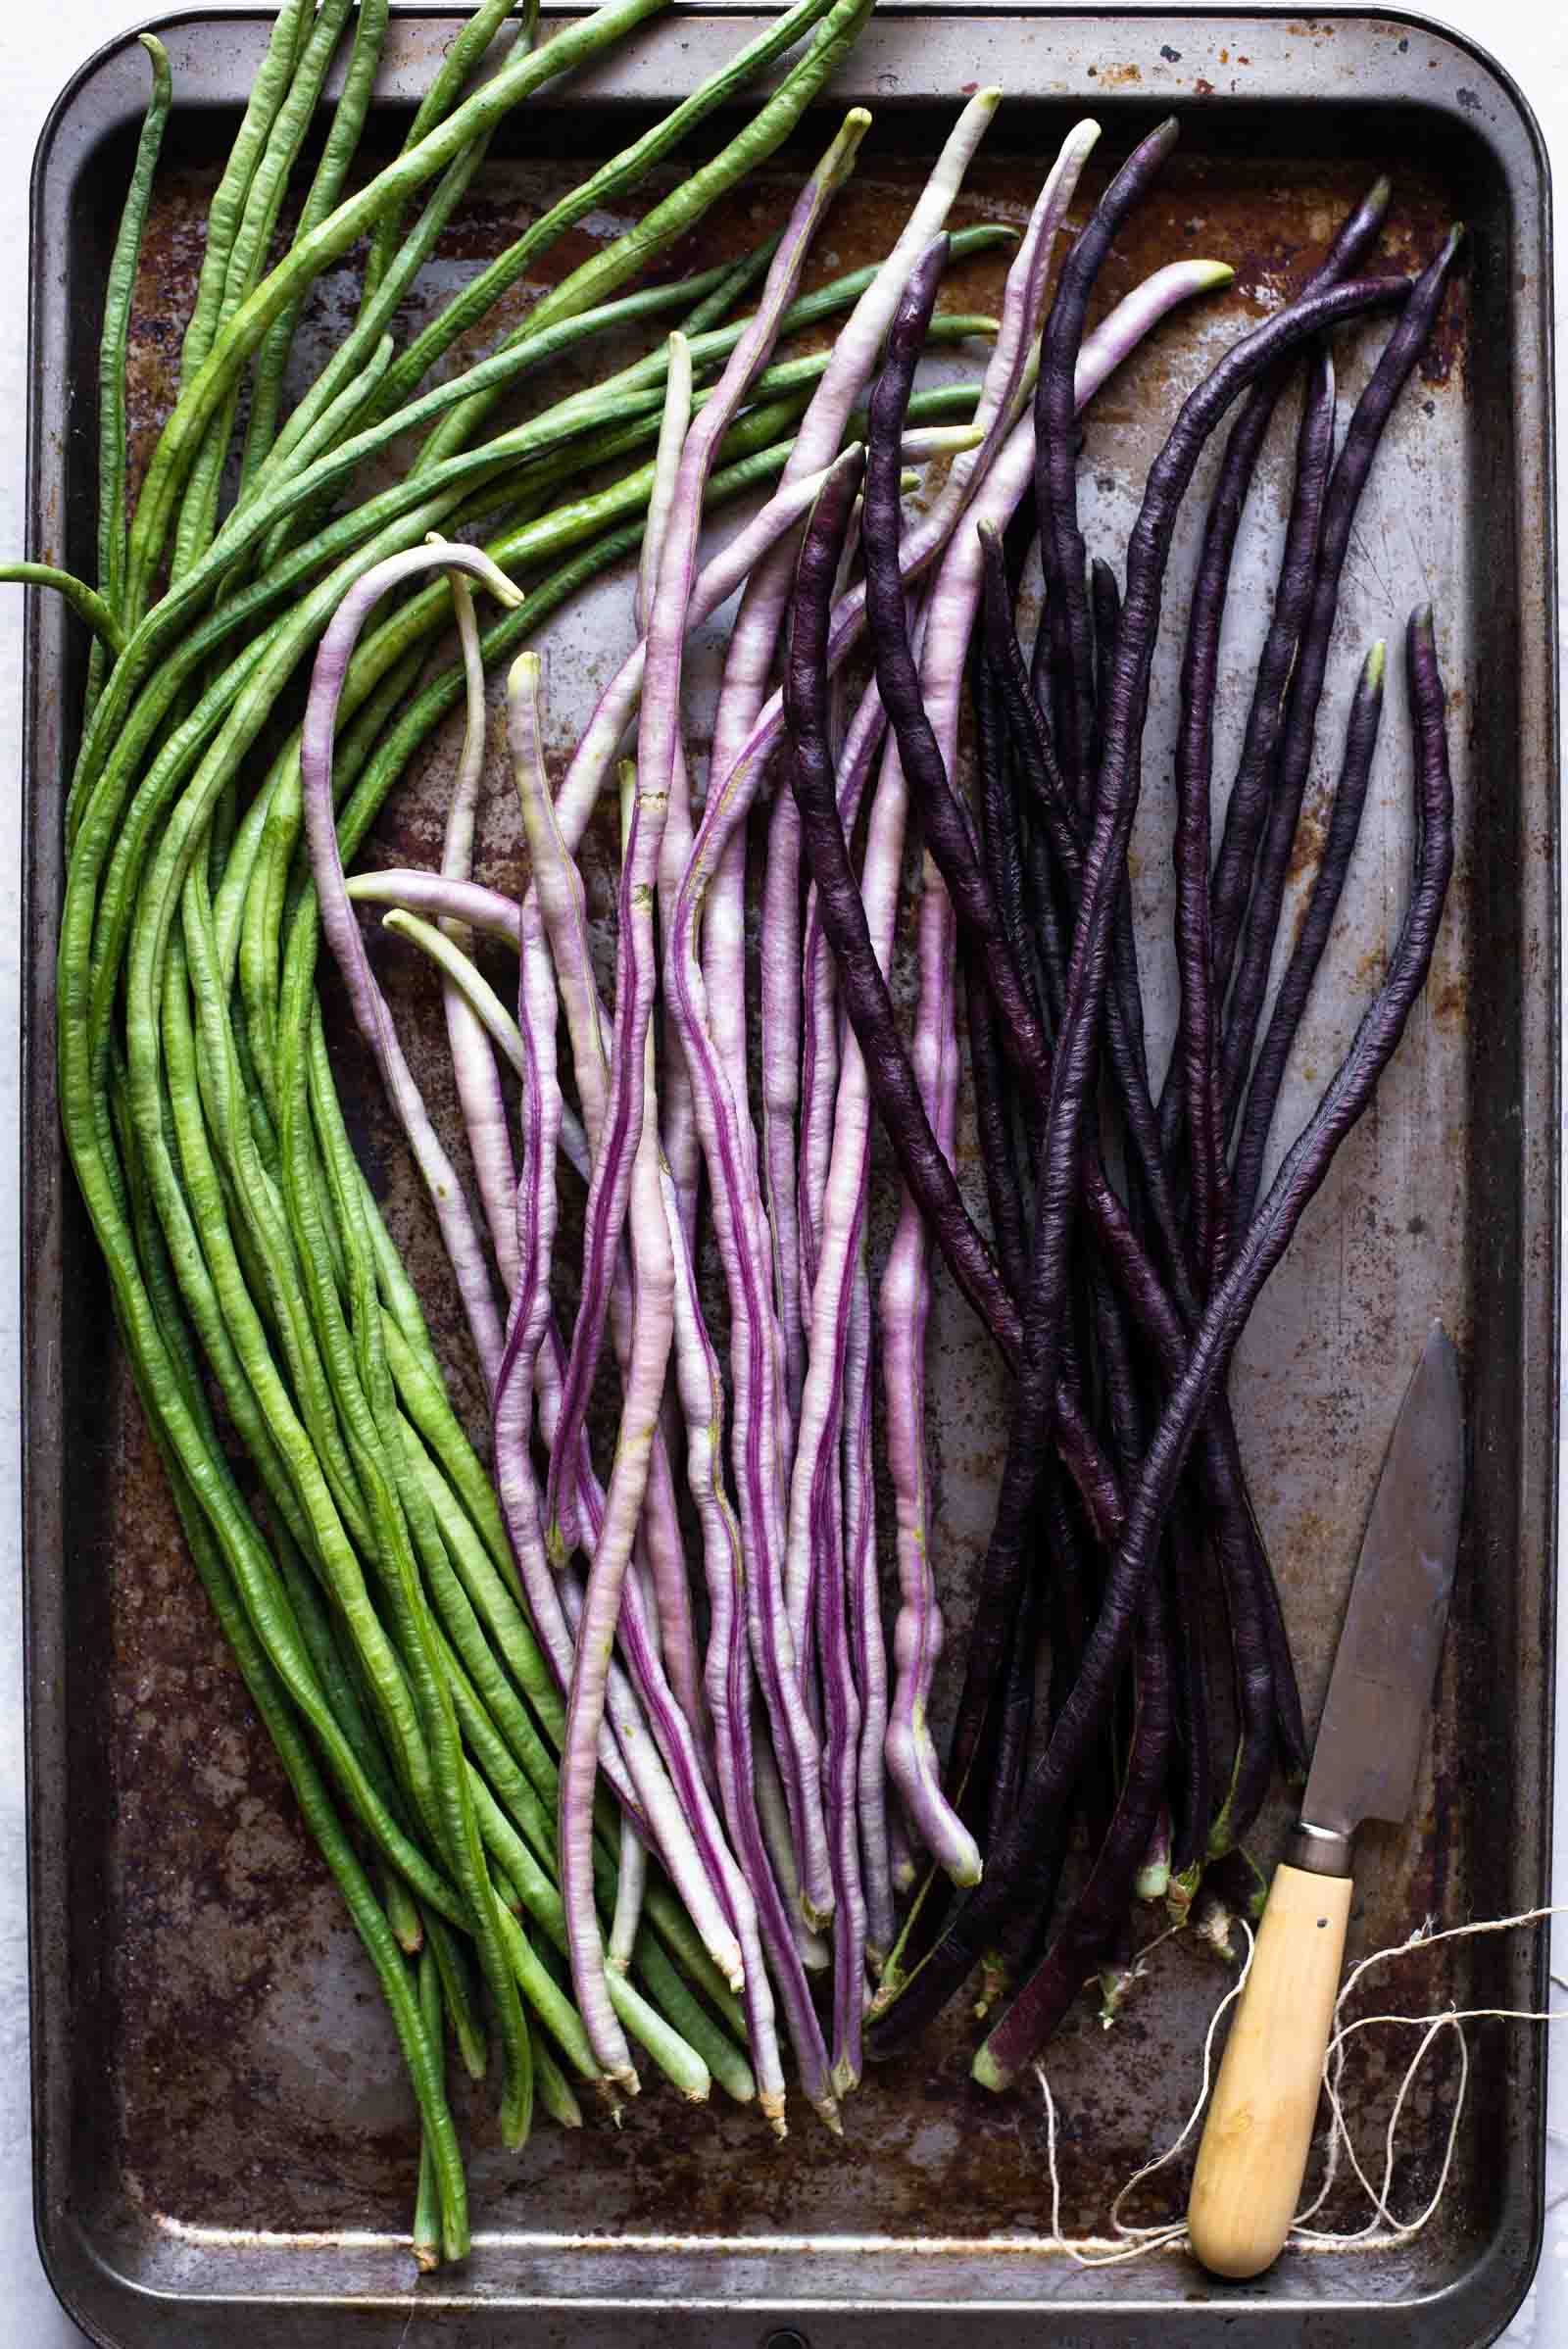 green and purple yardlongbeans